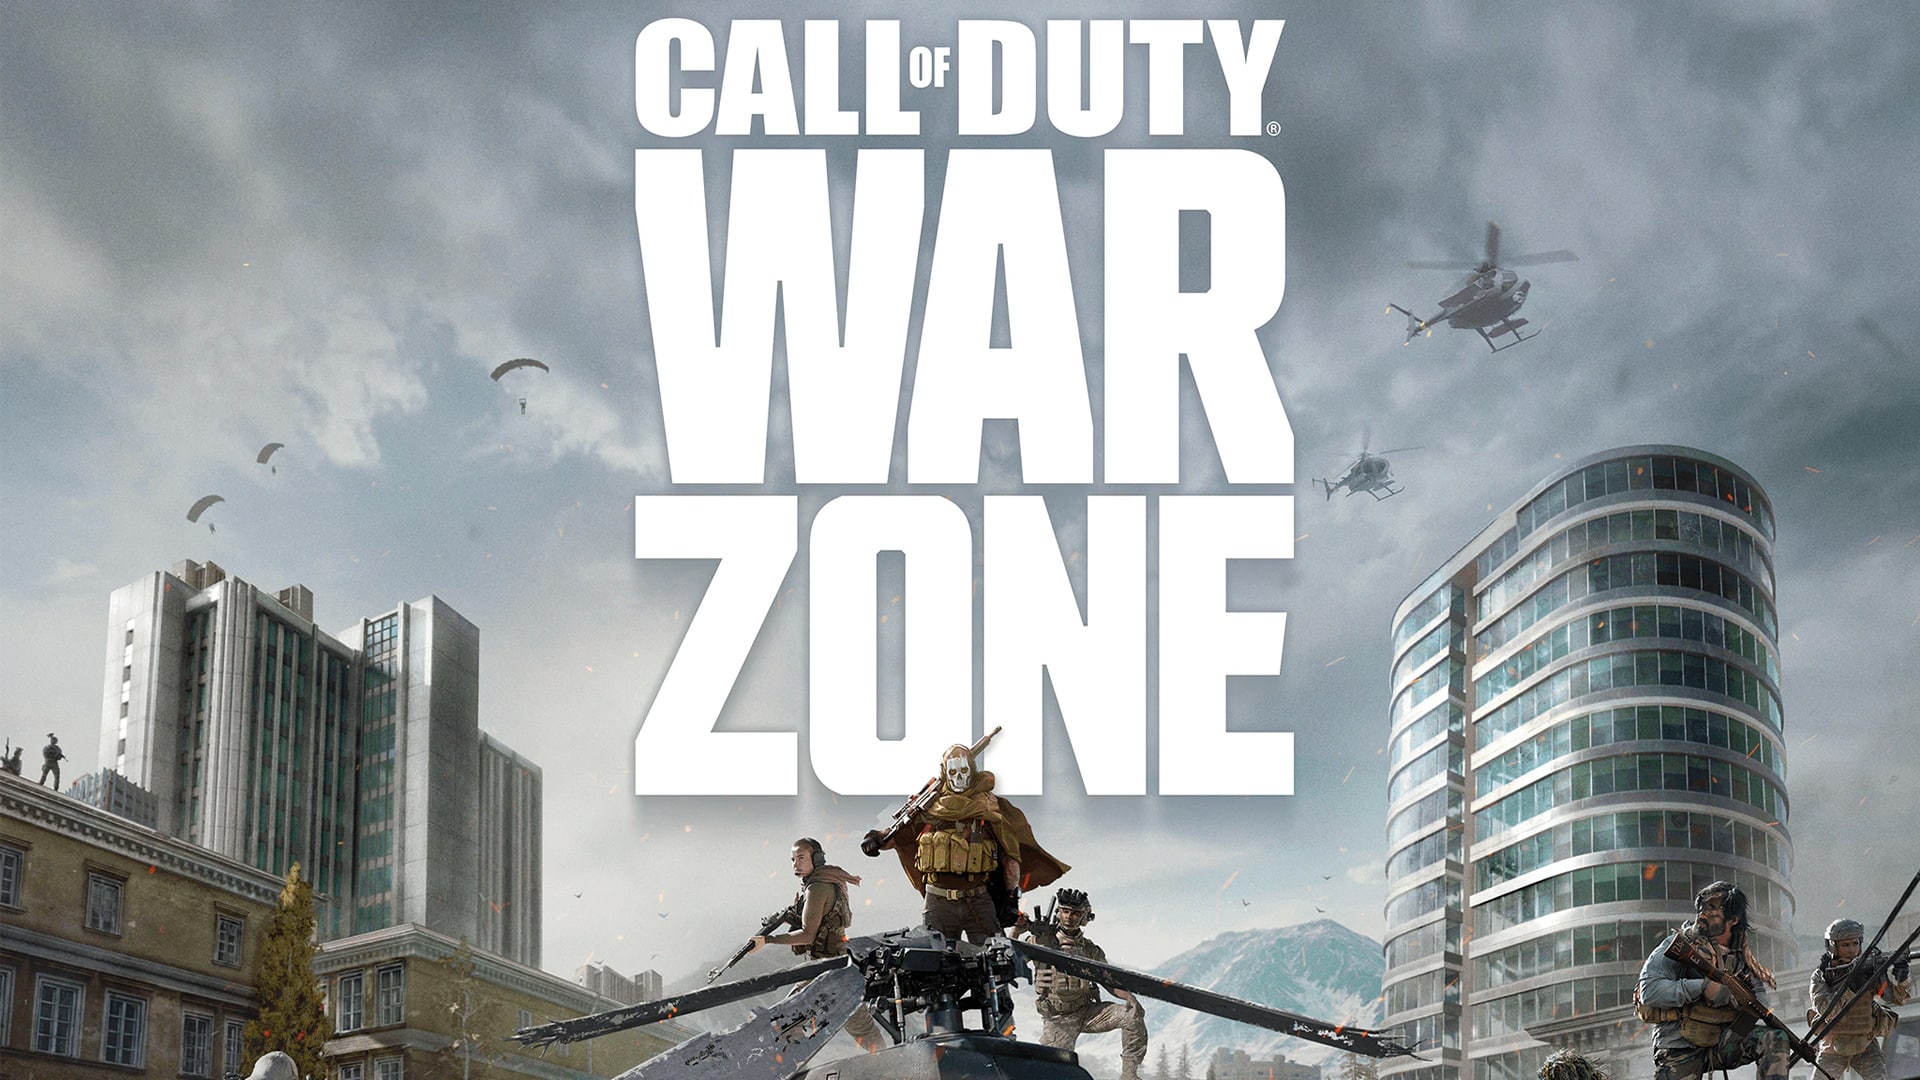 Cod warzone mobile на андроид. Cod Price Warzone 2. Call of Duty Warzone logo. Баннер для ютуба Call of Duty Warzone 2.0.